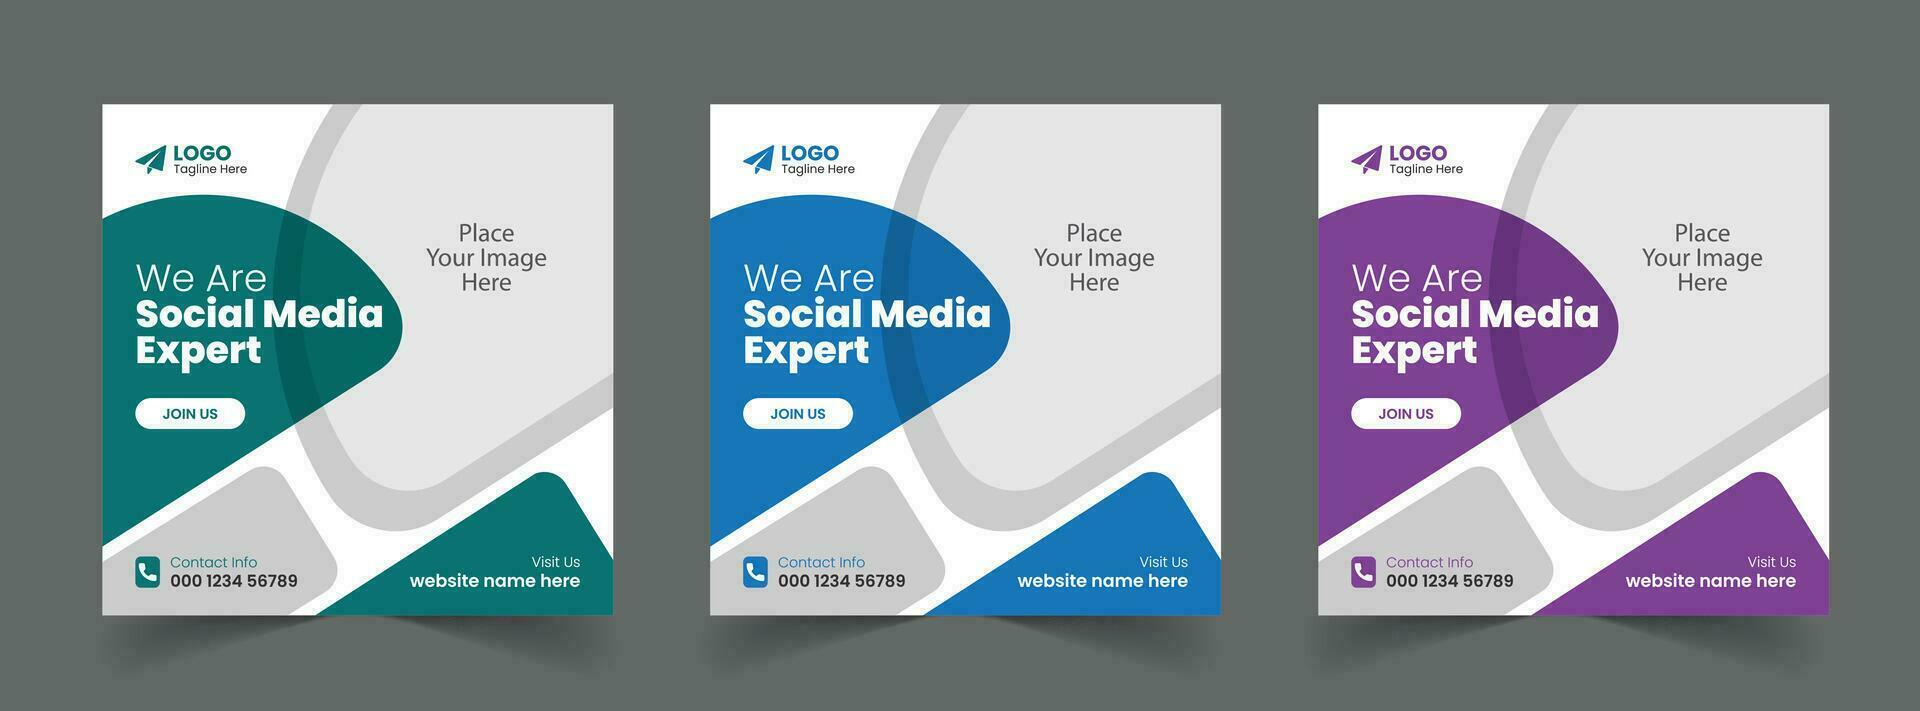 gratis vector corporativo negocio promoción digital agencia social medios de comunicación enviar modelo web bandera diseño